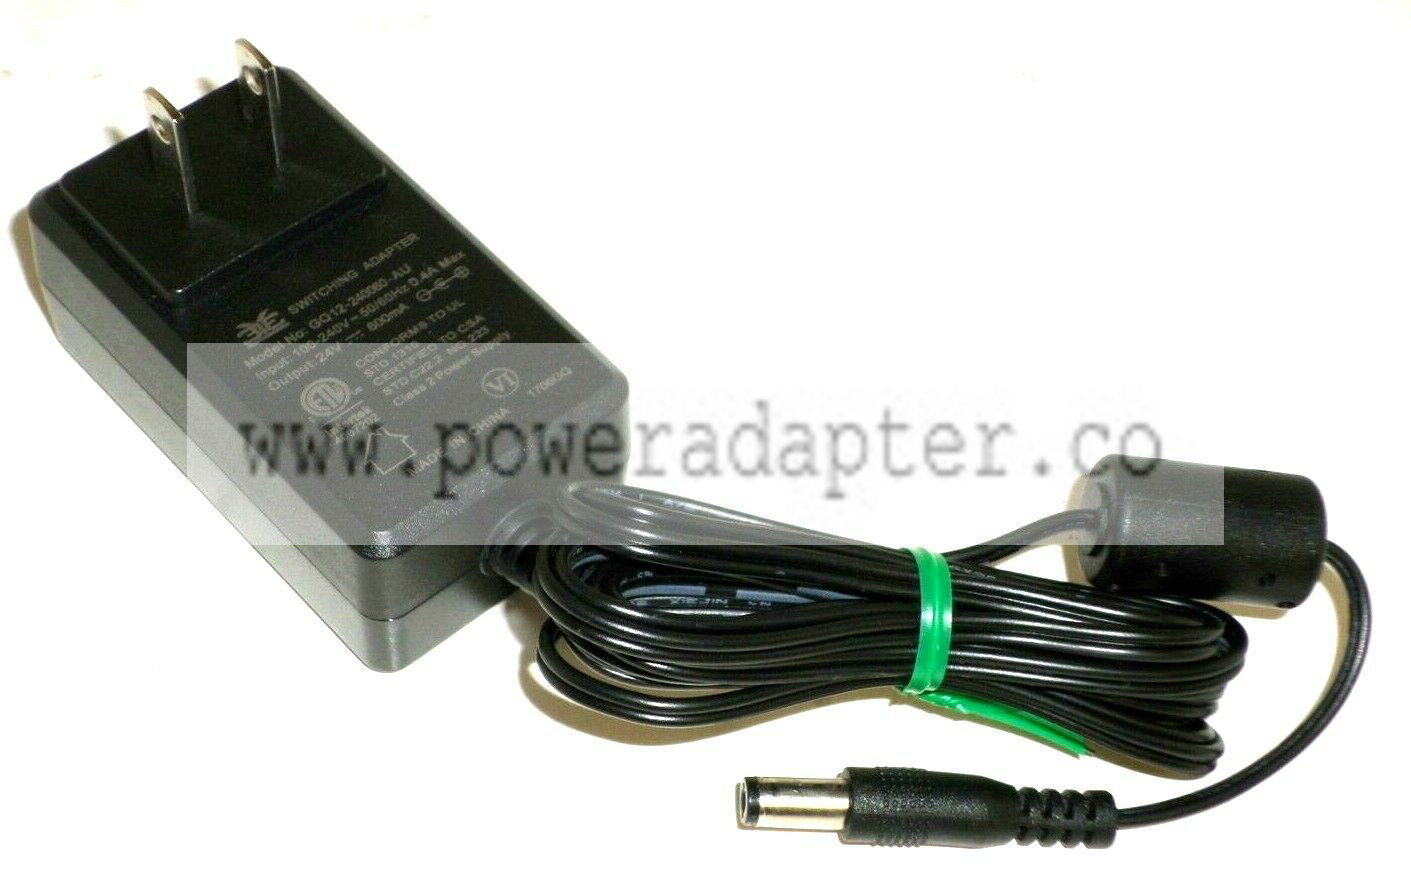 3YE Switching Power Supply Adapter 24V 600mA Model GQ12-240060-AU MPN: GQ12-240060-AU Brand: 3YE UPC: Does not app